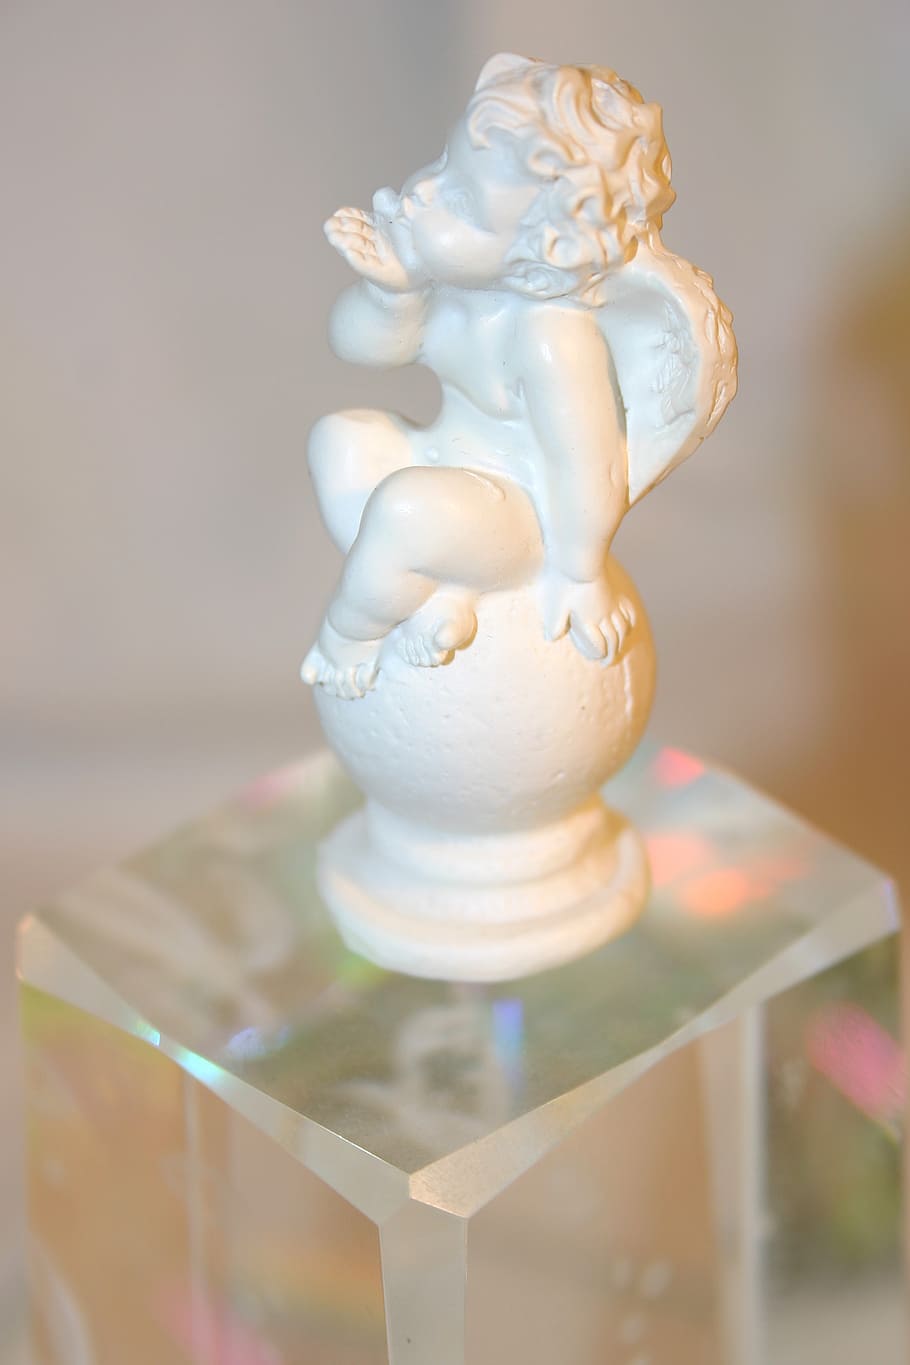 cherub, angel, angel figure, figure, wing, sculpture, small, decoration, heavenly, porcelain figurine